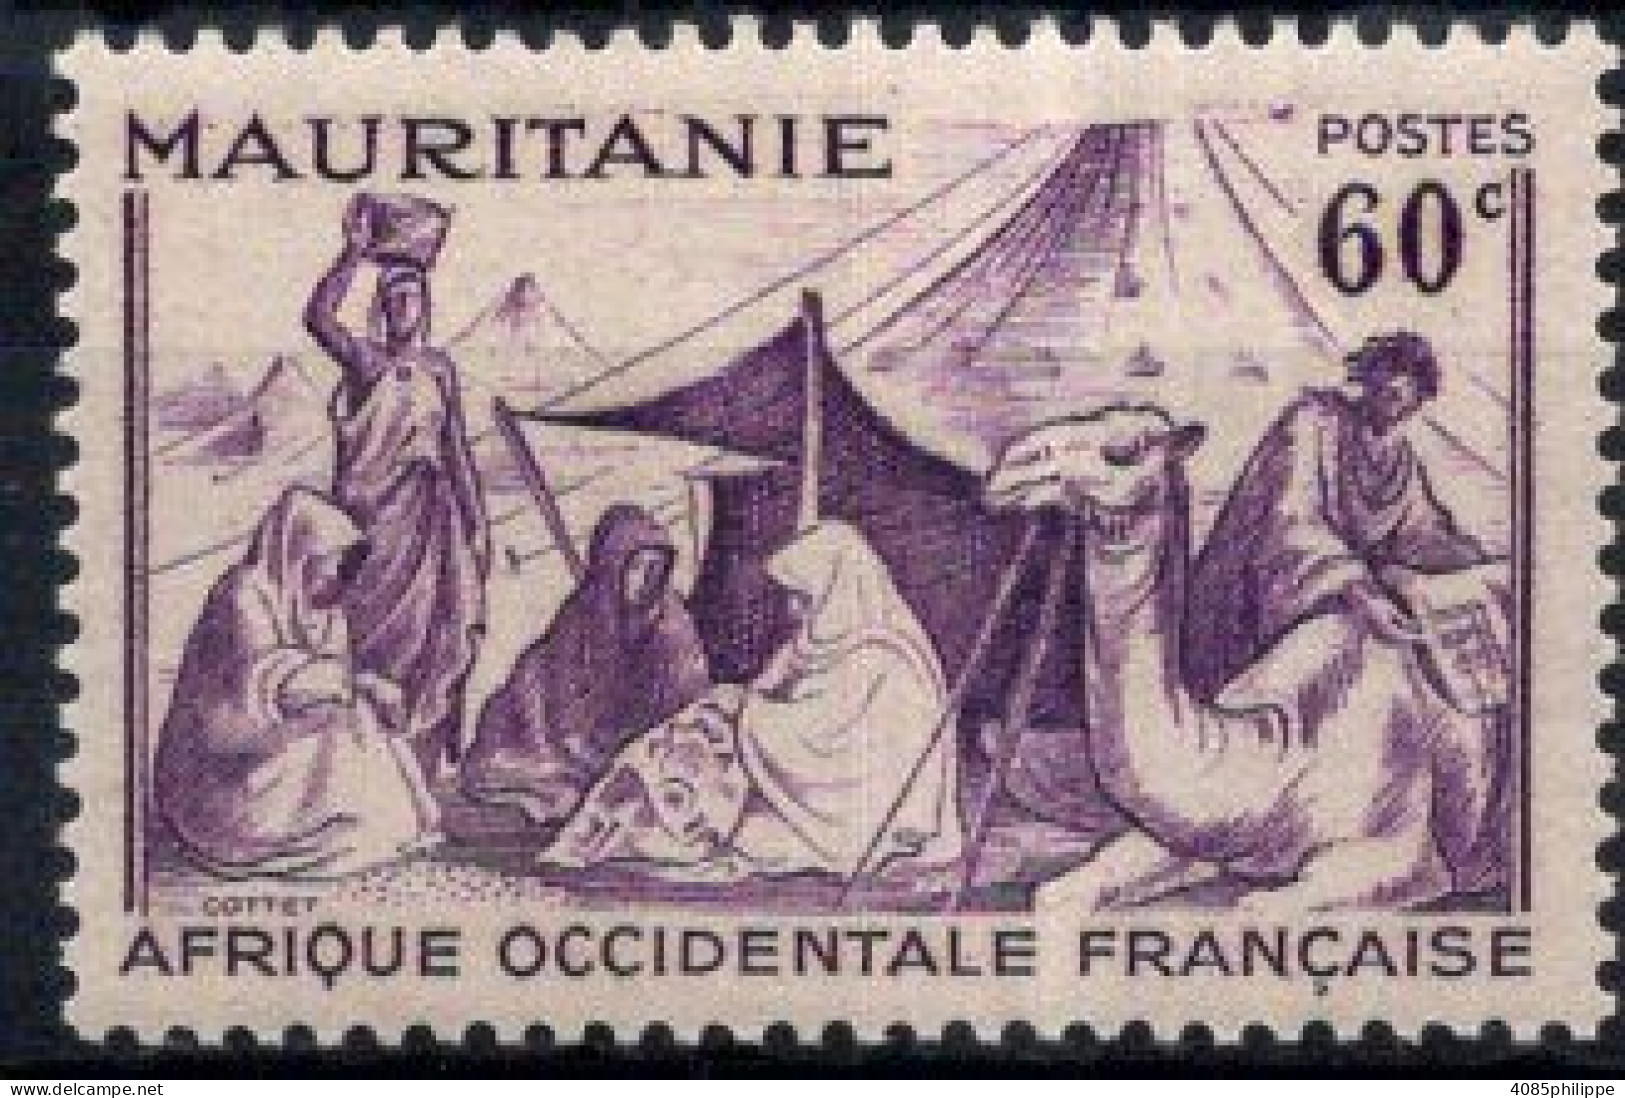 Mauritanie Timbre-poste N°129** Neuf Sans Charnière TB Cote : 3€00 - Unused Stamps